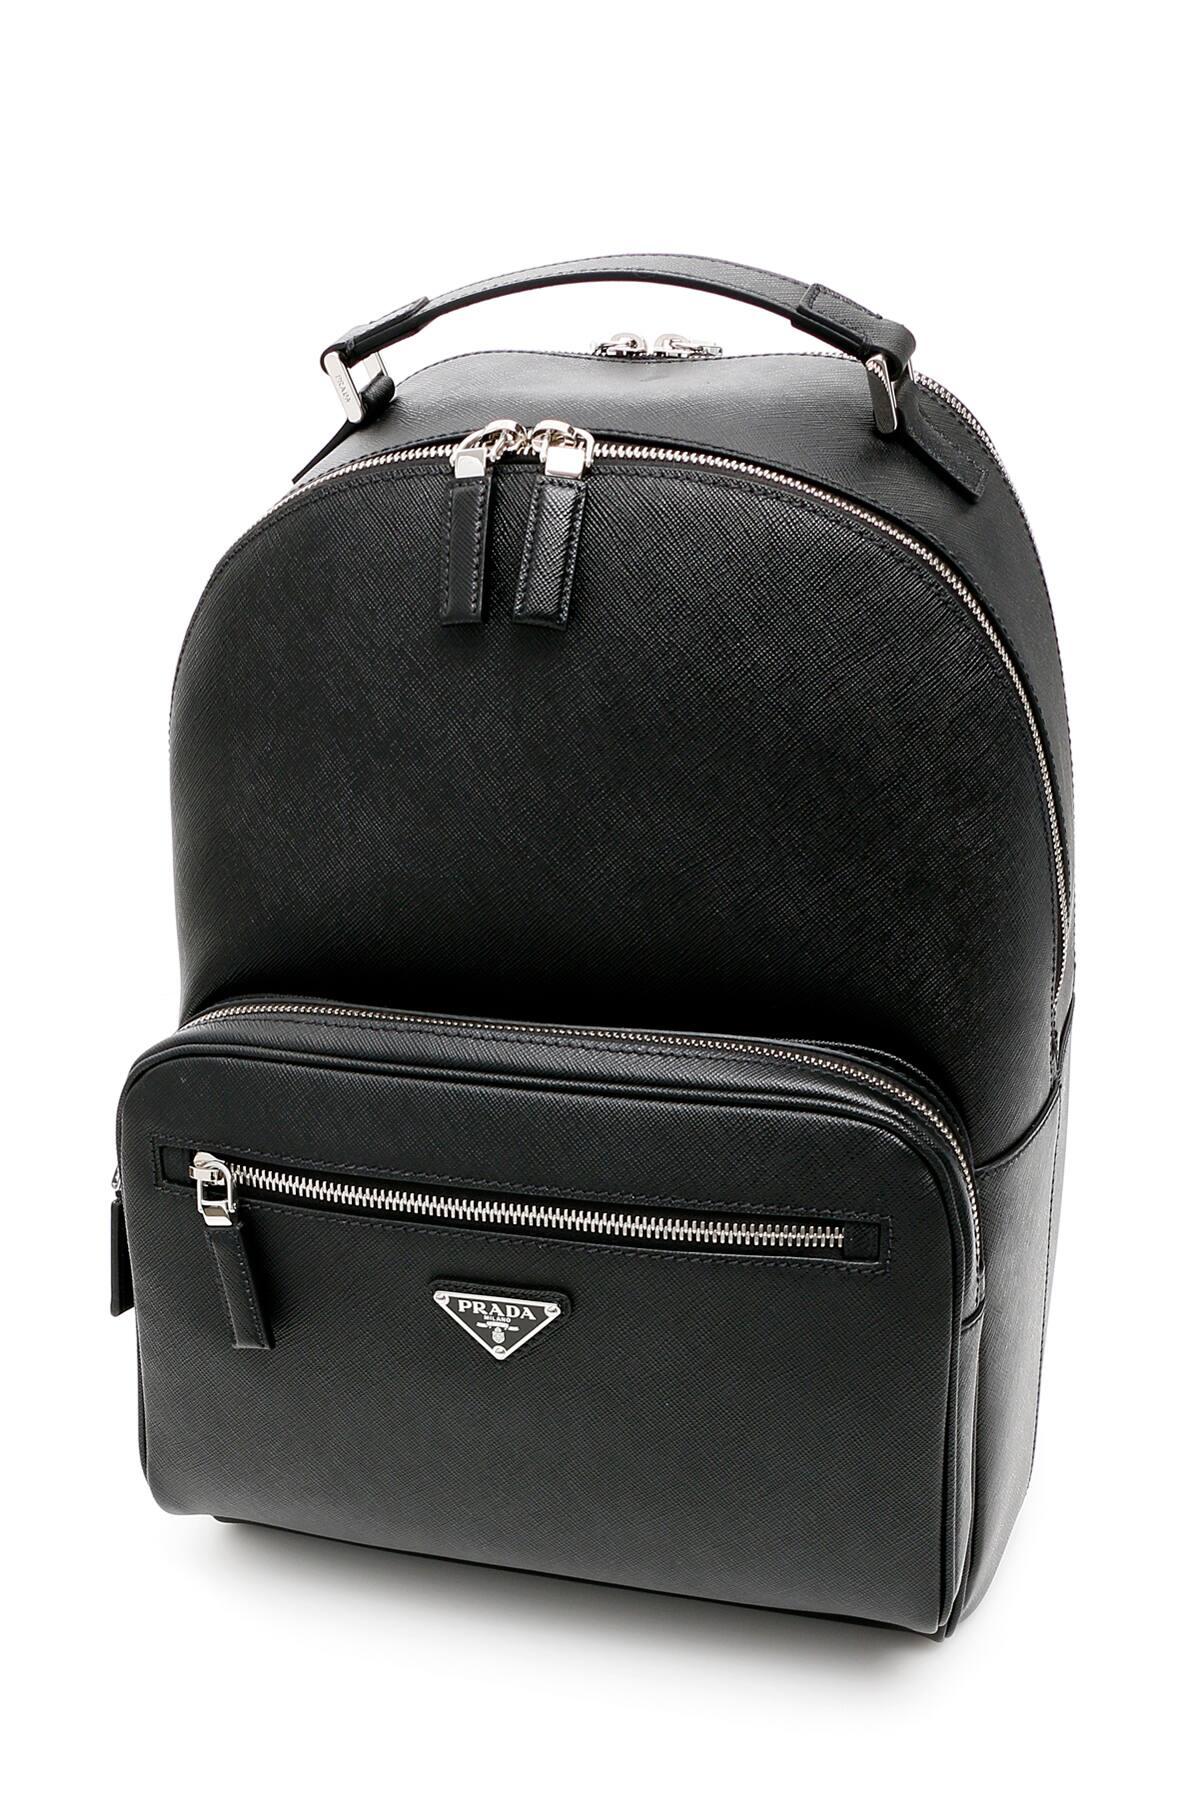 Prada Saffiano Leather Backpack in Black for Men | Lyst UK